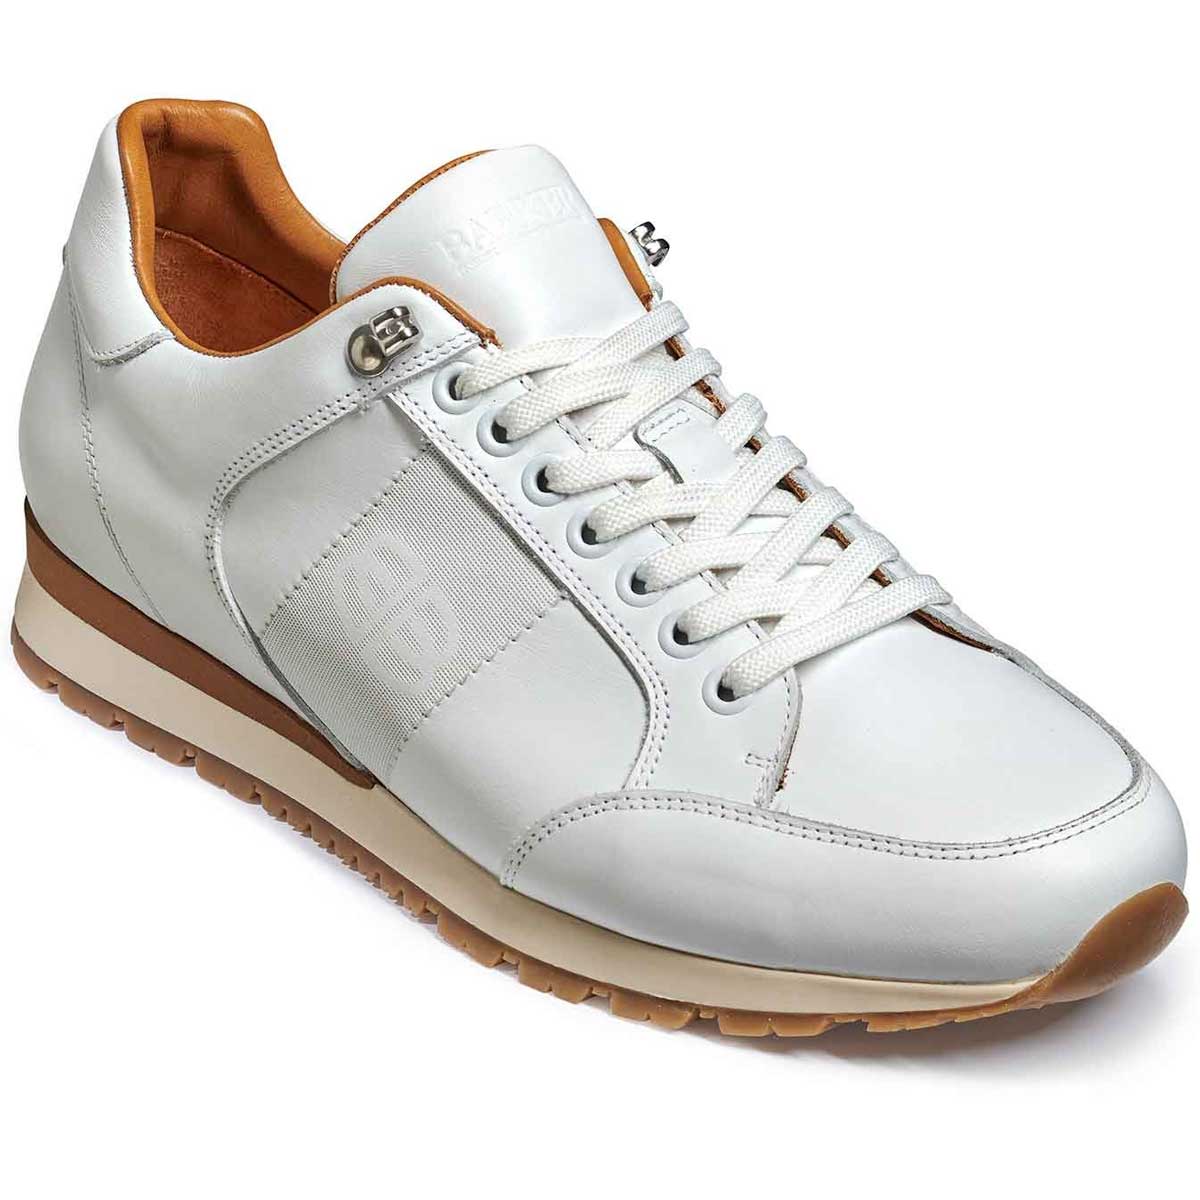 BARKER Seb Shoes - Mens Sneakers - White Calf